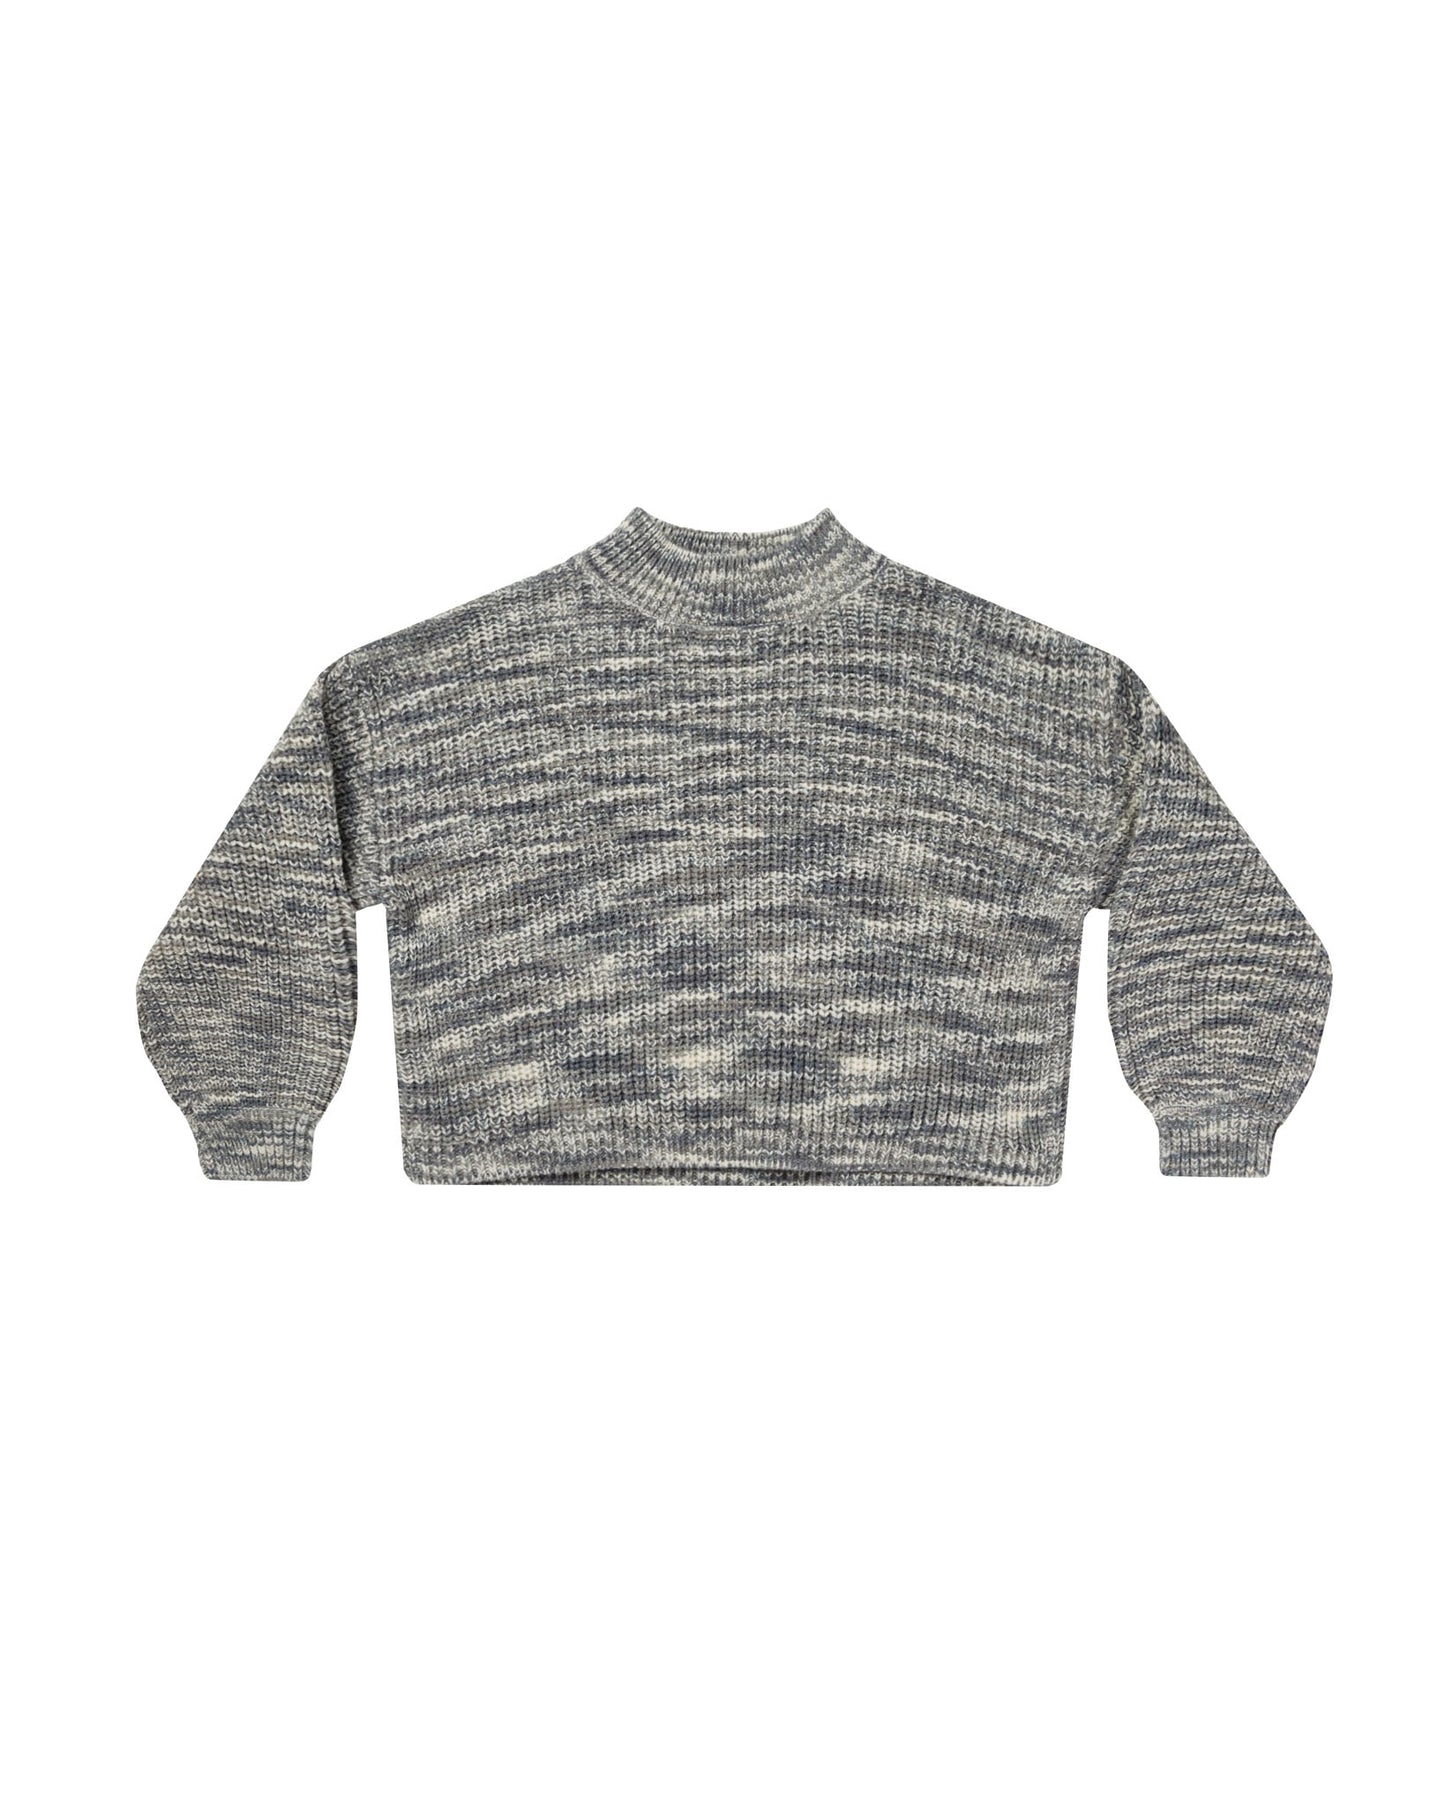 Rylee + Cru - Knit Sweater - Heathered Slate